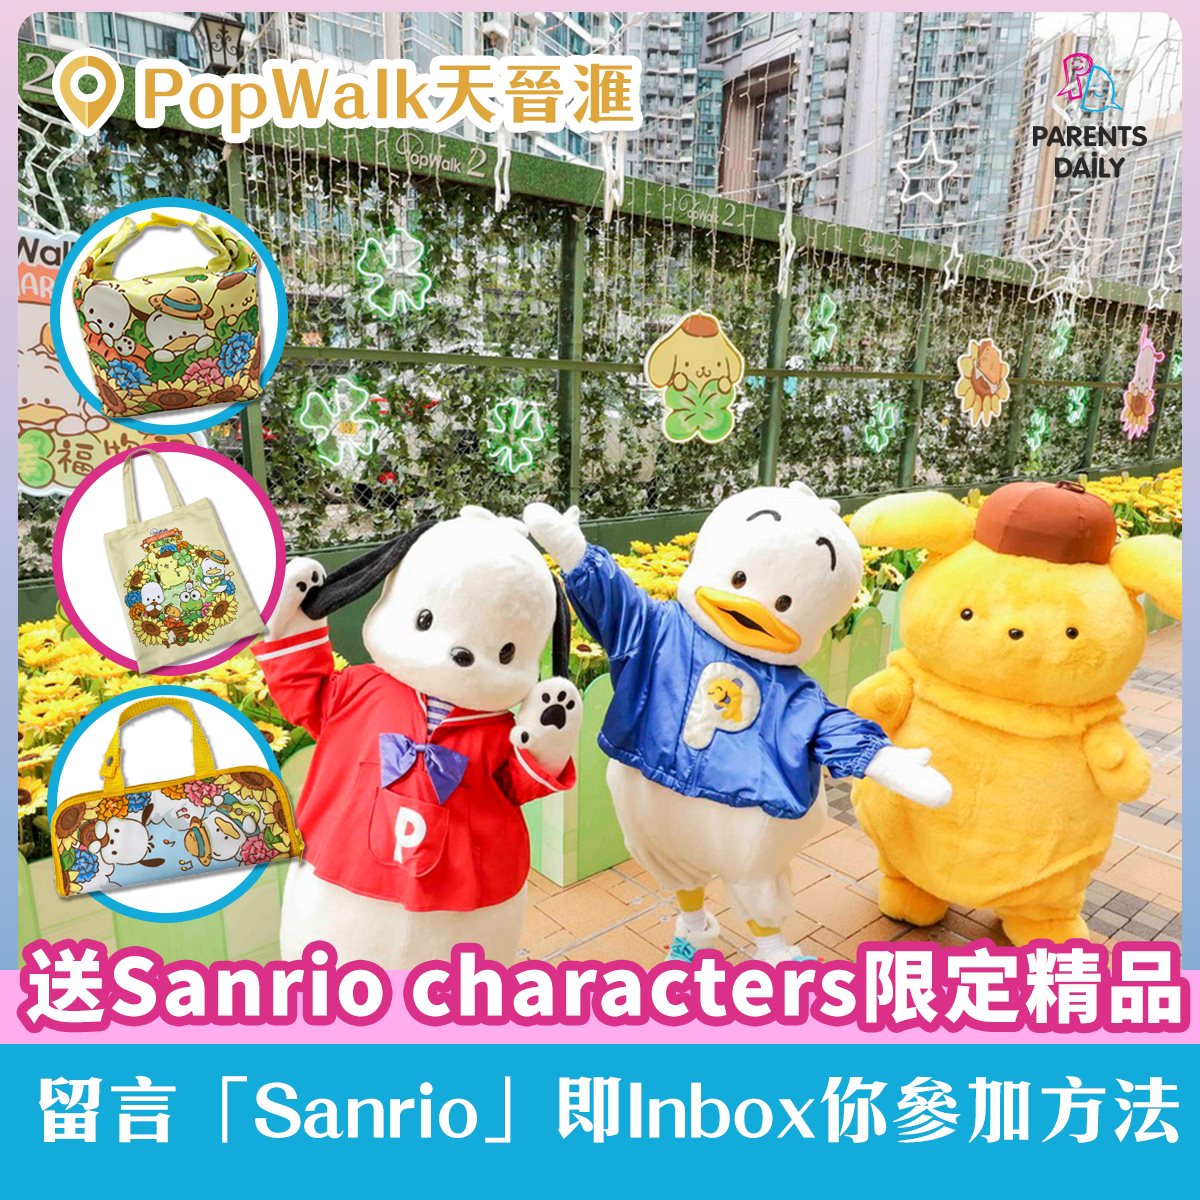 Parents Daily x PopWalk天晉滙 有獎遊戲送 Sanrio characters限定精品